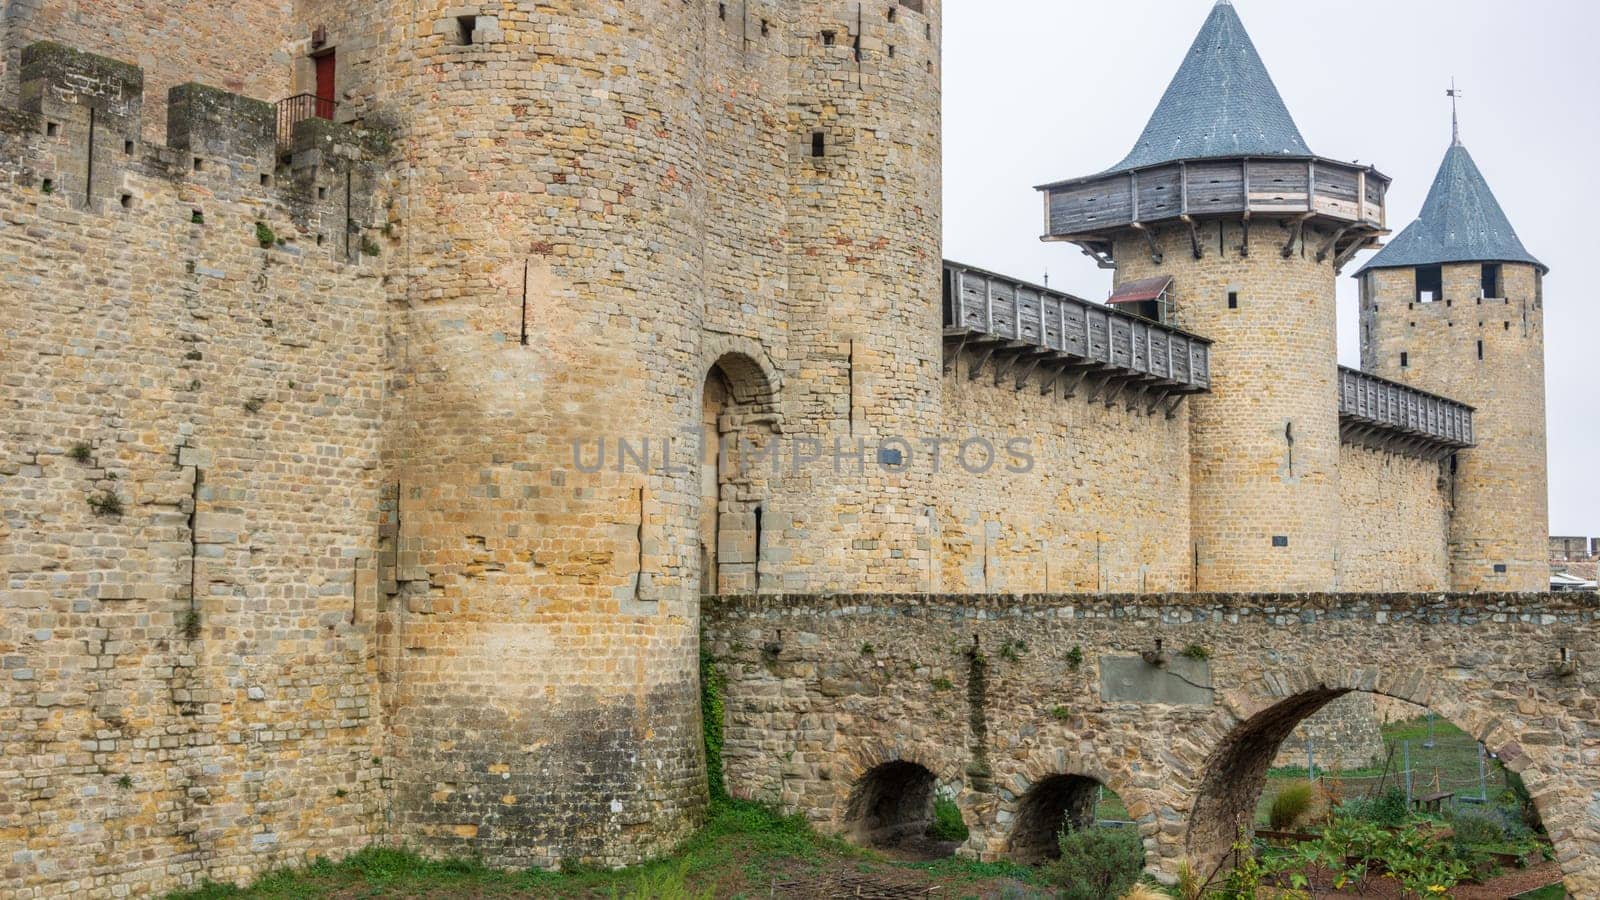 Castle of Carcassonne in France by vladispas